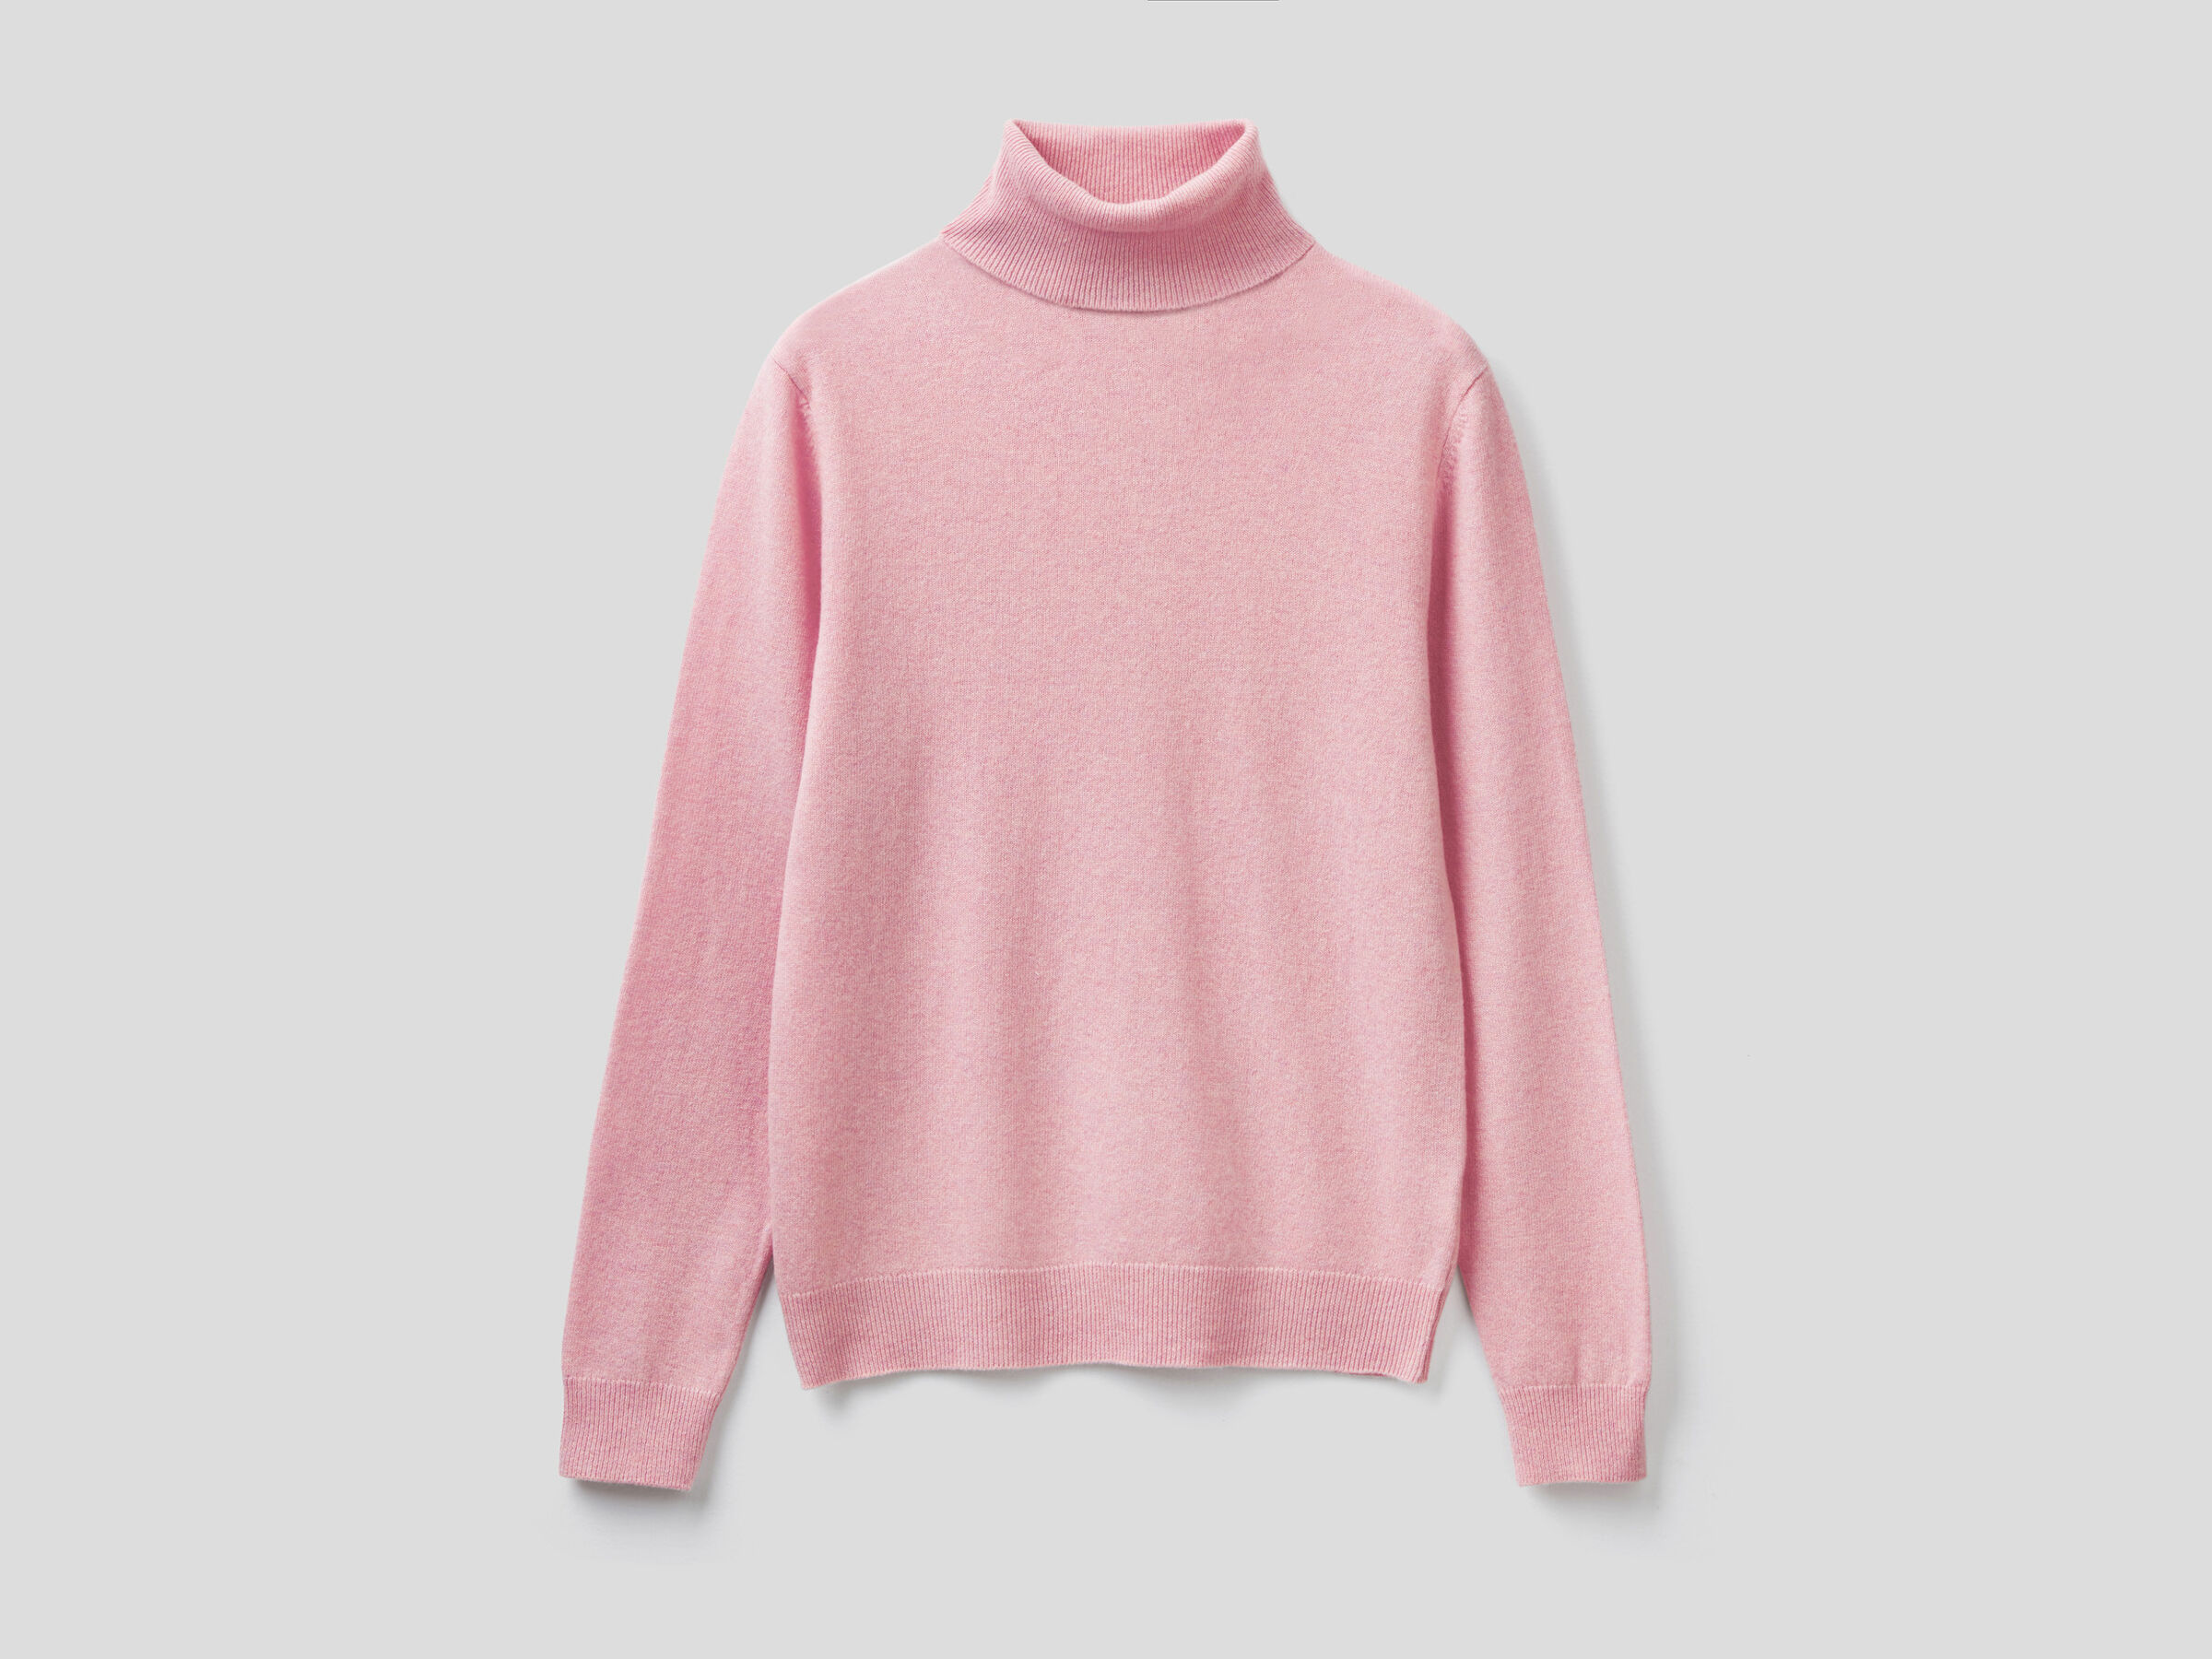 Pink turtleneck sweater in pure virgin wool